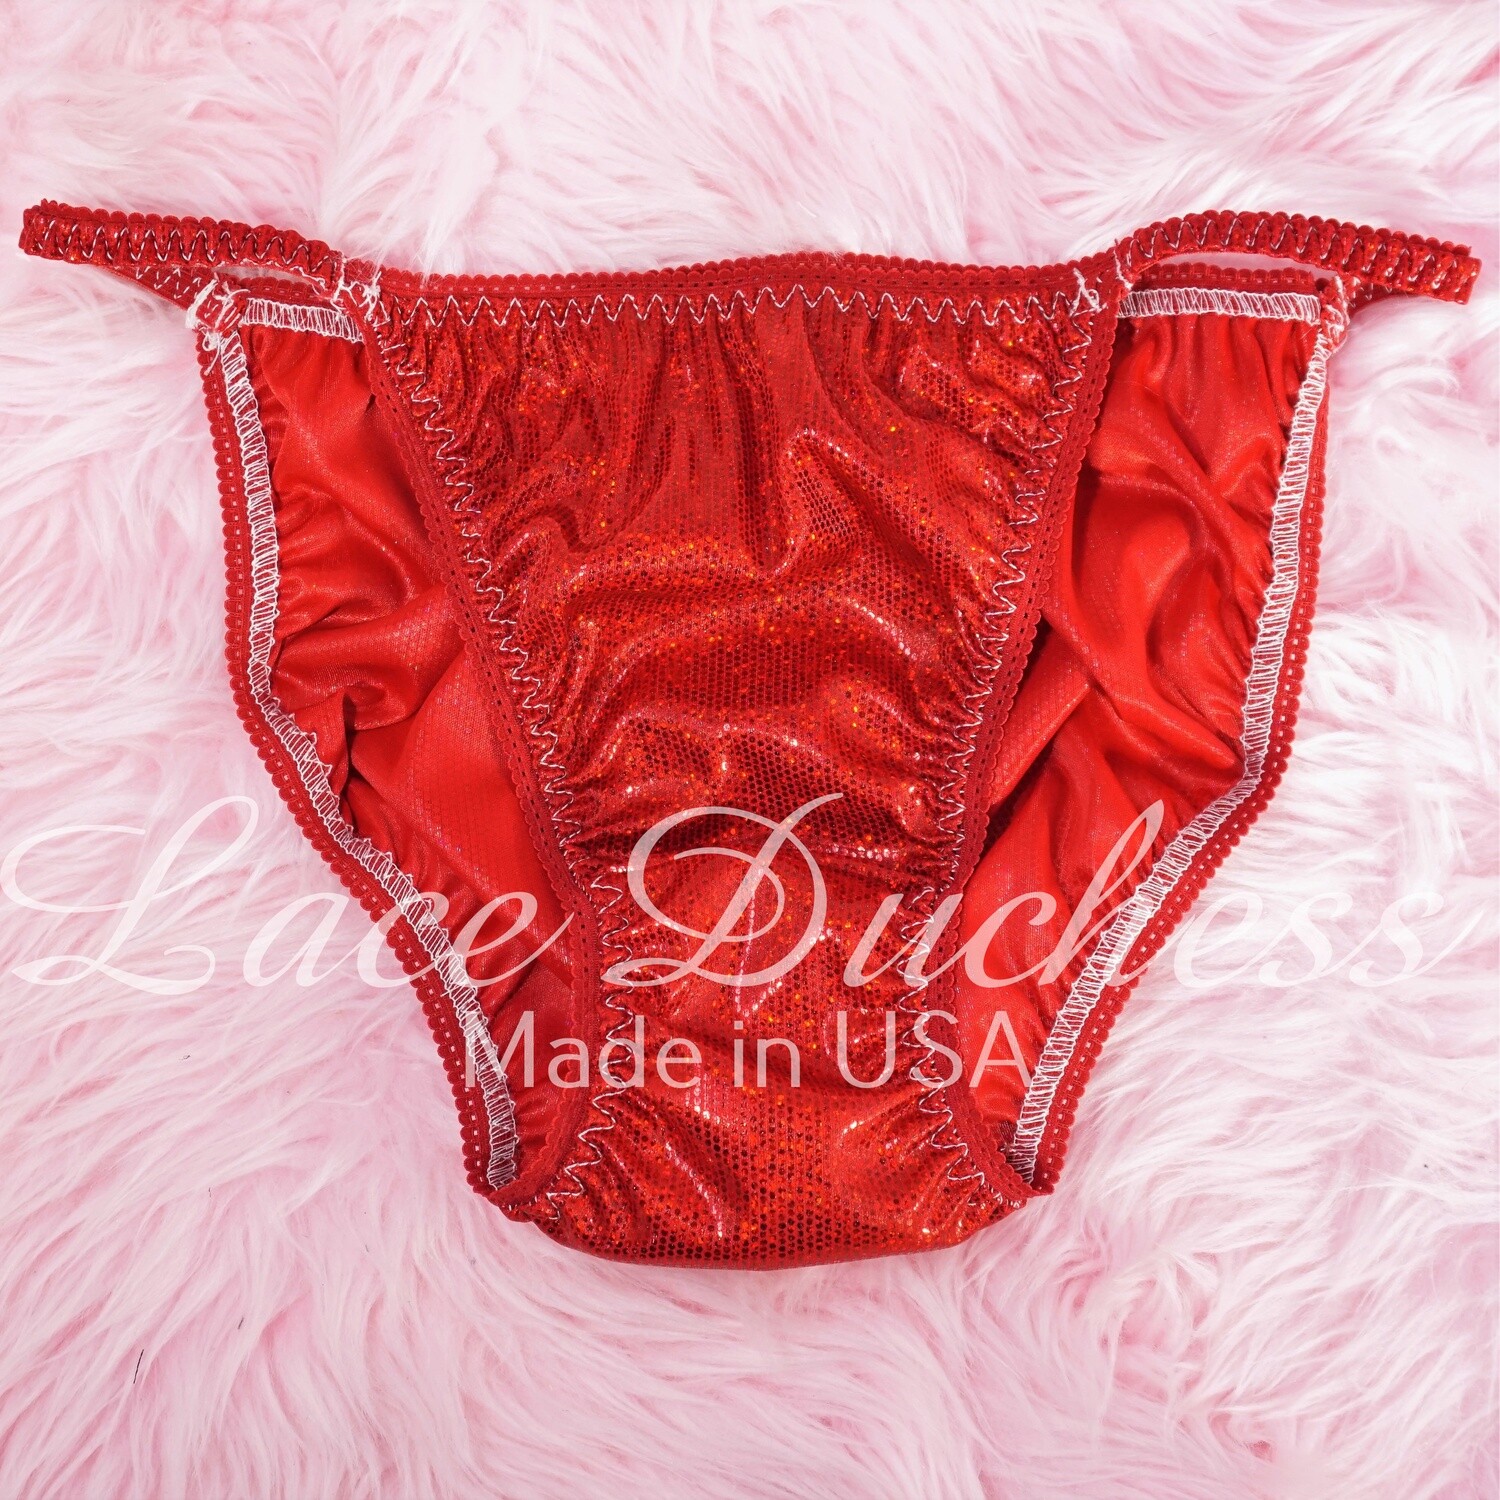 Lace Duchess Classic 80's Valentine's Red FOIL Metallic Shiny satin panties - String bikini - 7 only